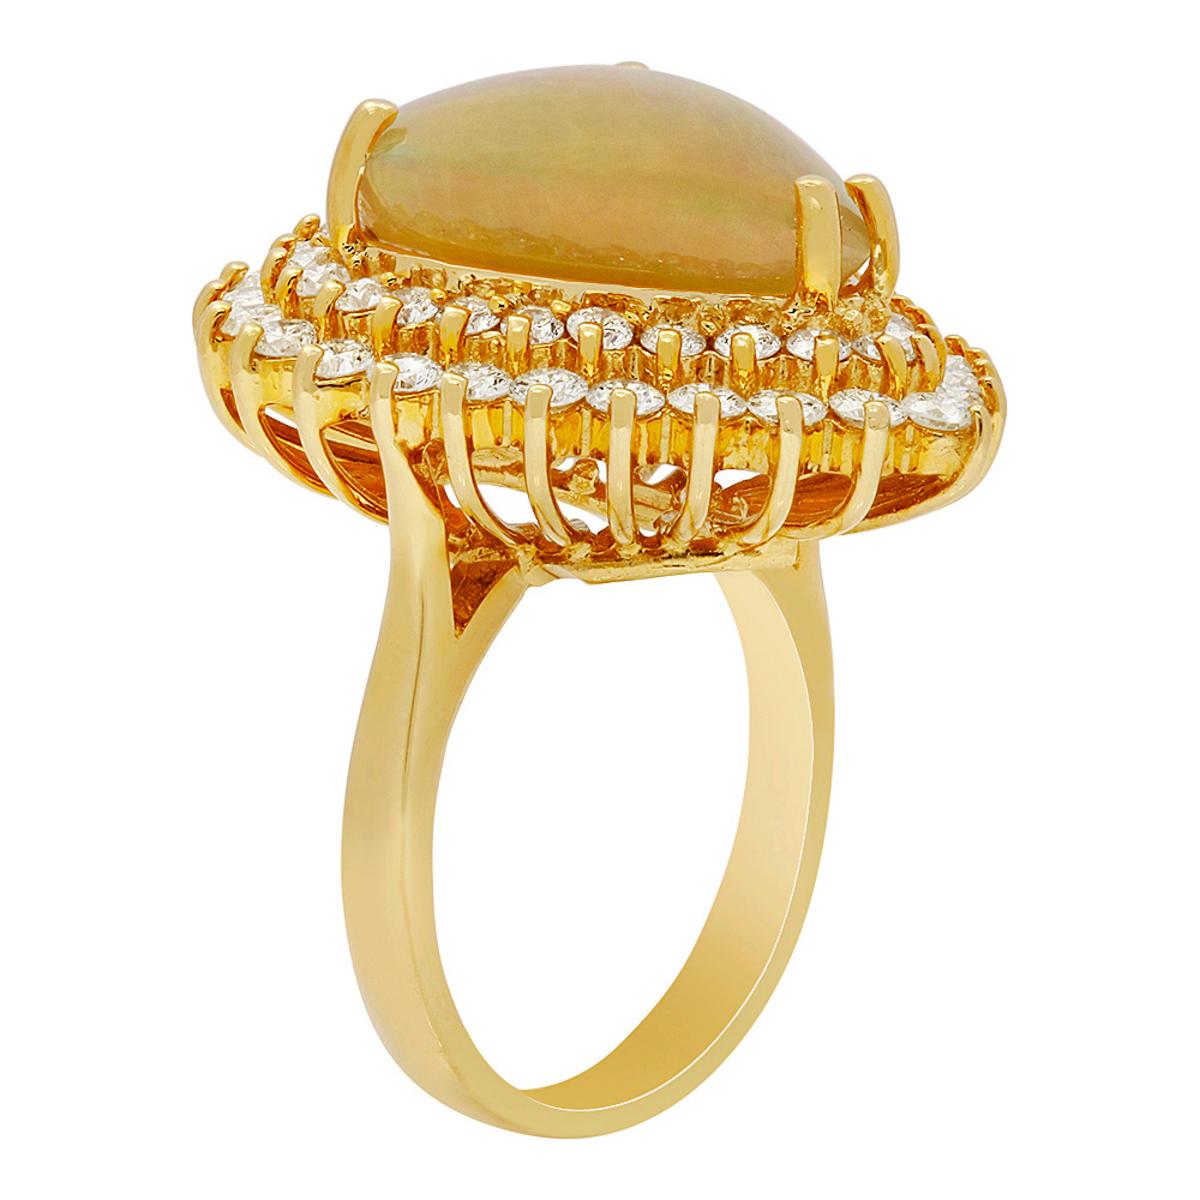 14k Yellow Gold 9.58ct Opal 3.48ct Diamond Ring